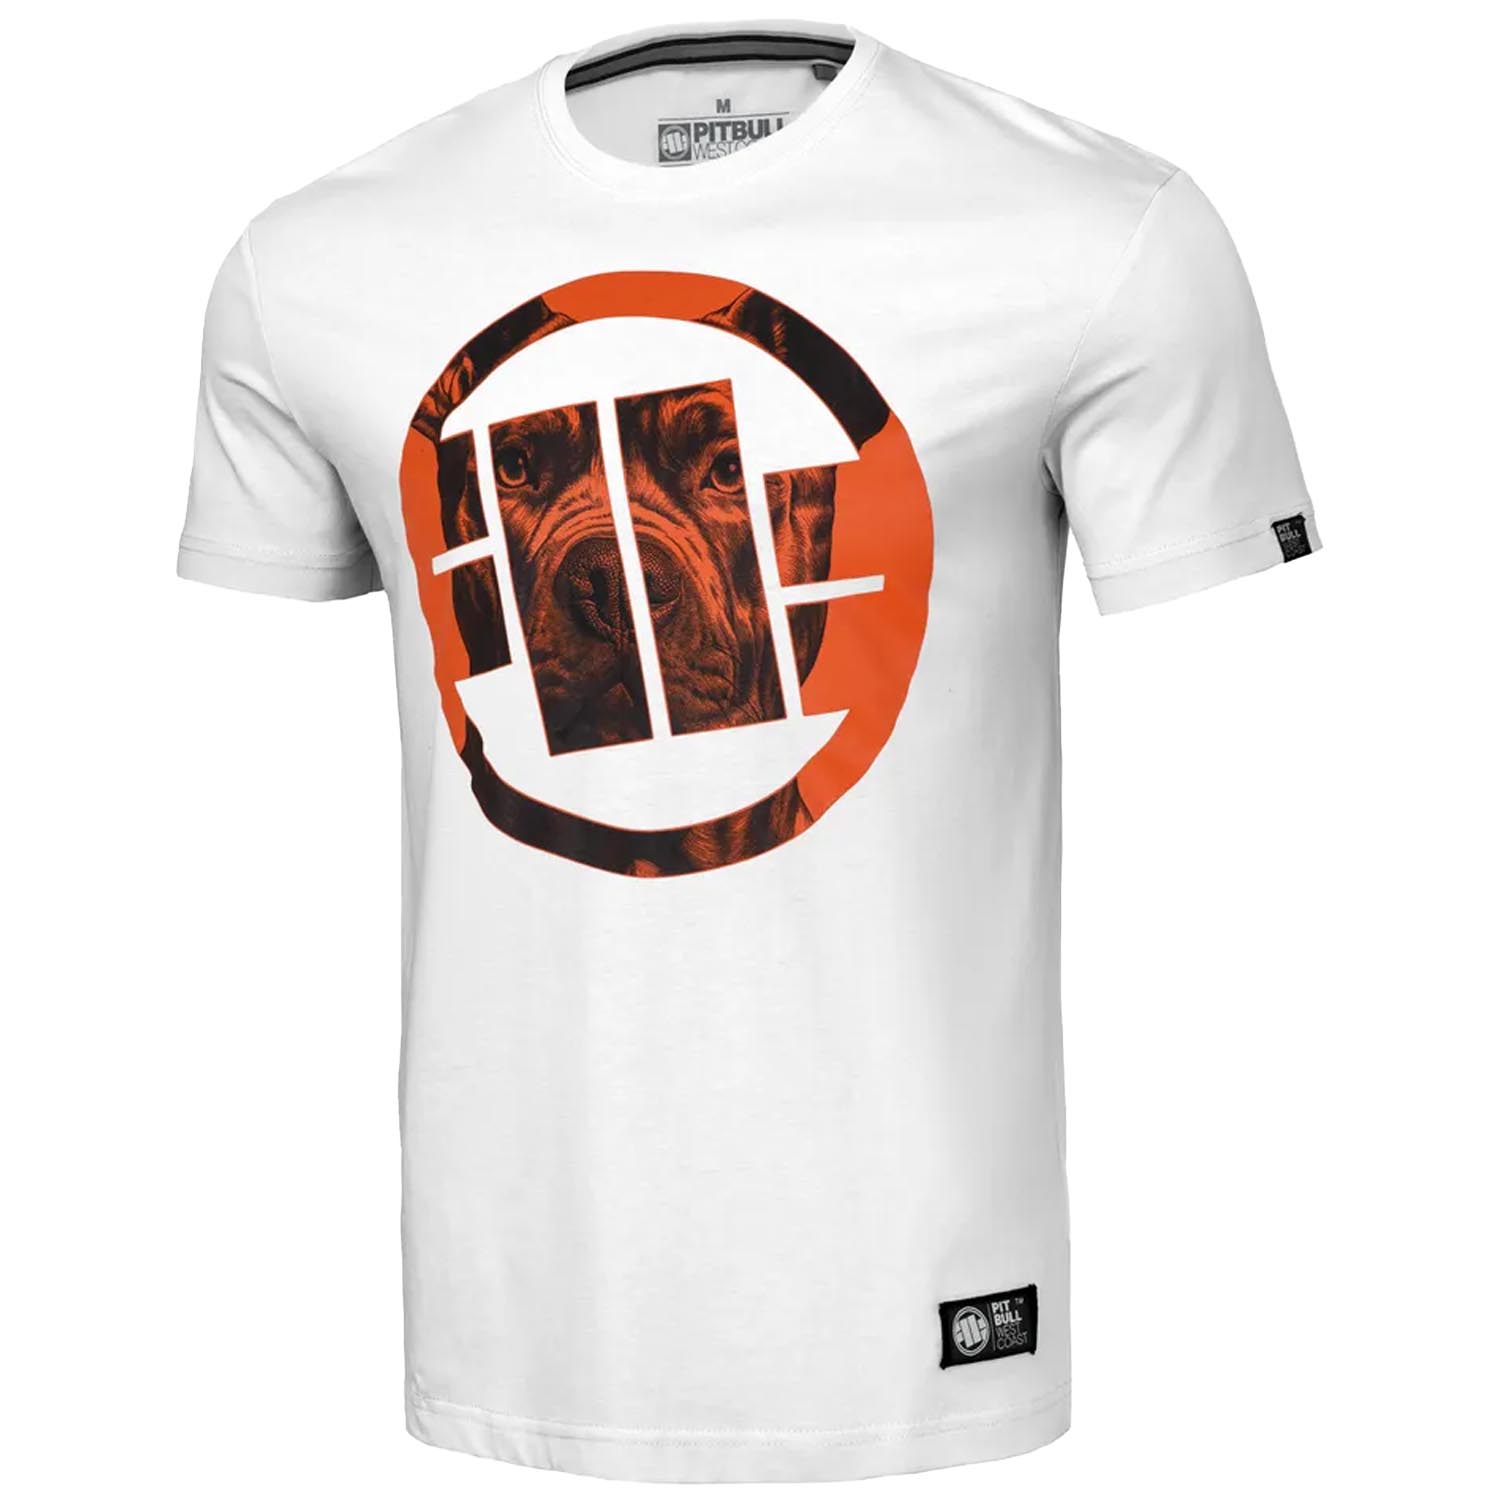 Pit Bull West Coast T-Shirt, Orange Dog 24, weiß-orange, L